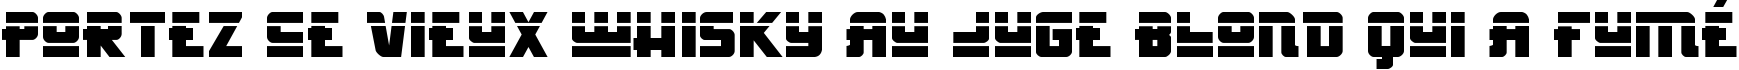 Пример написания шрифтом Hong Kong Hustle Laser Regular текста на французском